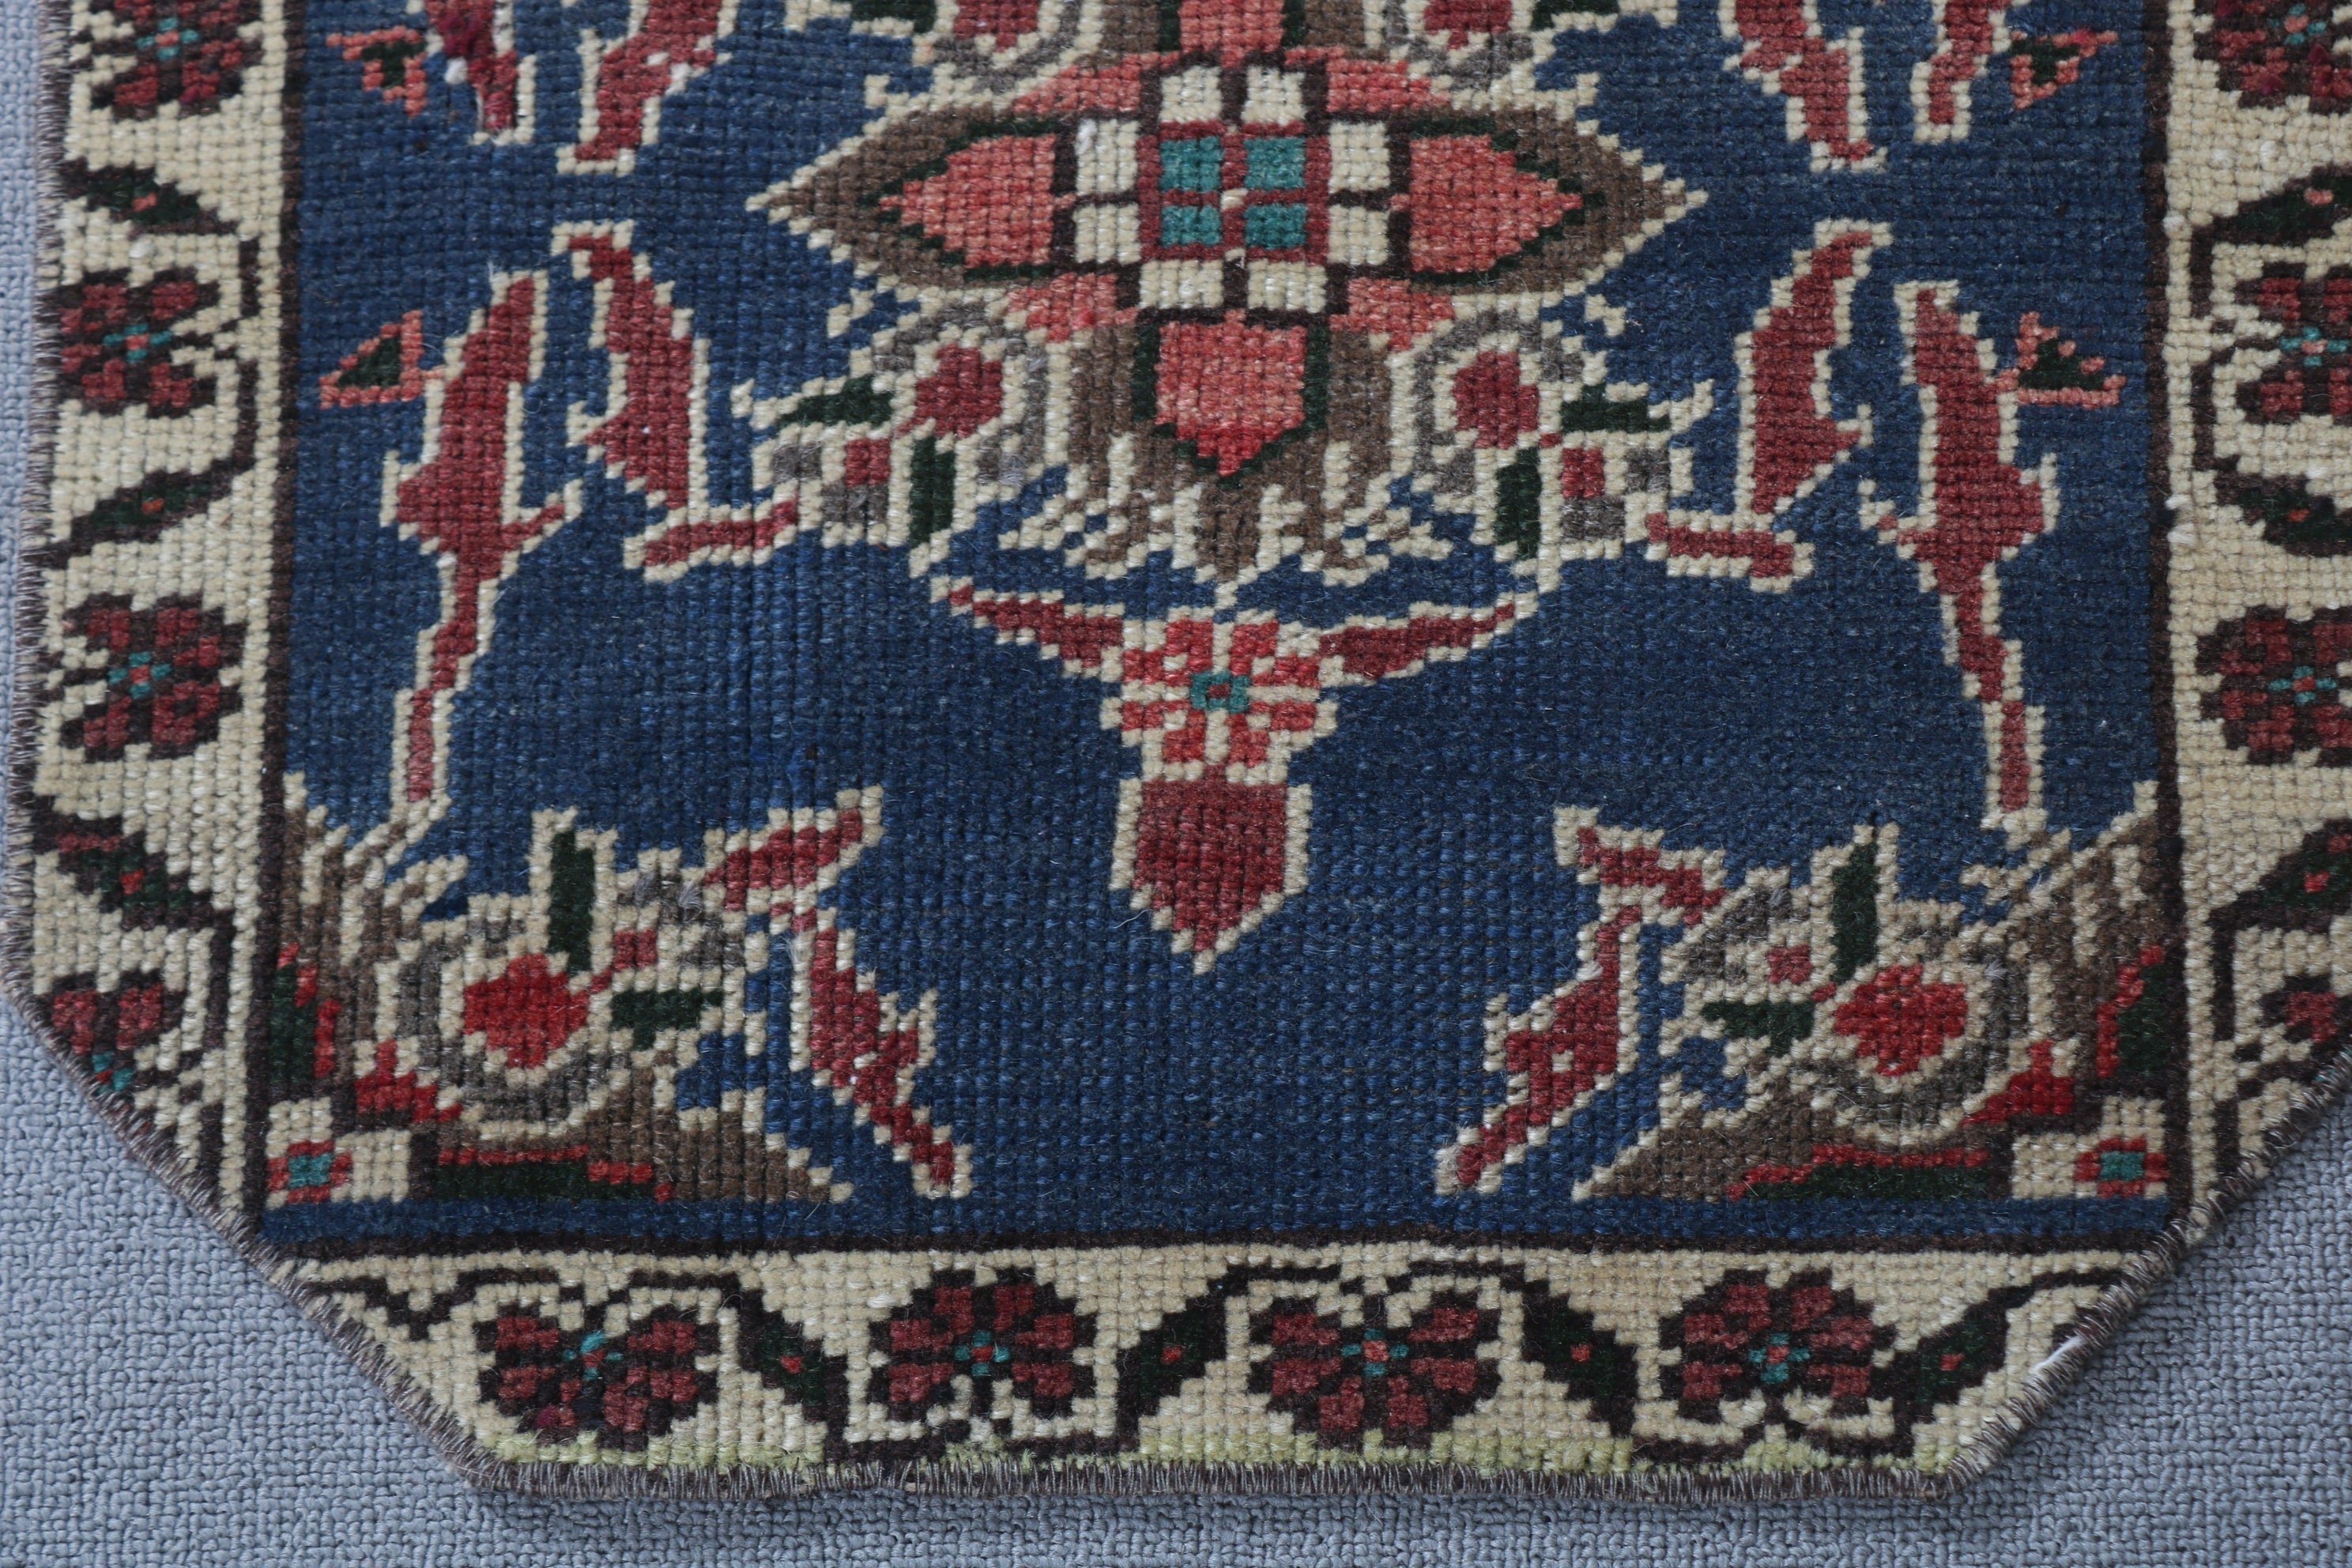 Floor Rug, Blue Floor Rug, Wall Hanging Rugs, Turkish Rug, 1.6x1.5 ft Small Rugs, Vintage Rug, Rugs for Bath, Moroccan Rug, Kitchen Rugs